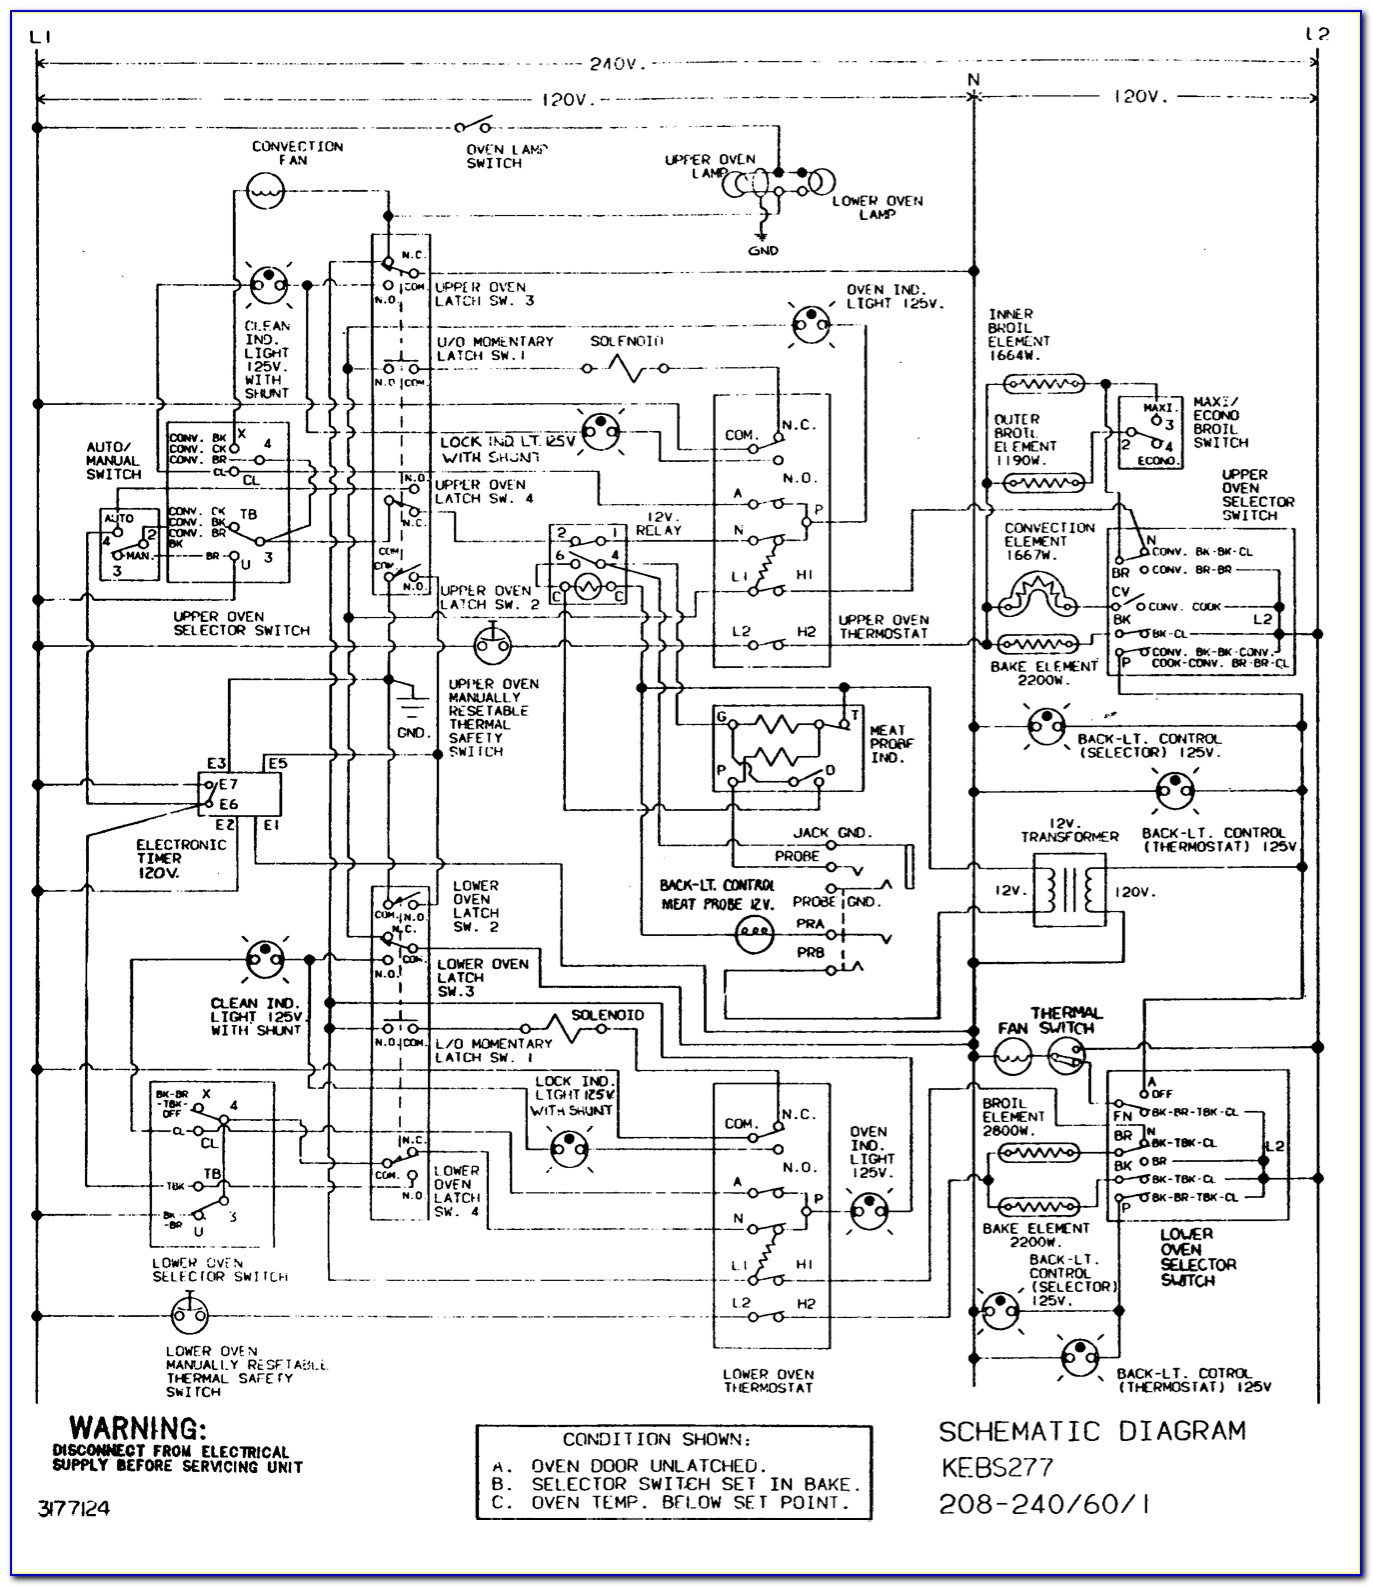 Kitchenaid Dishwasher Wiring Diagram